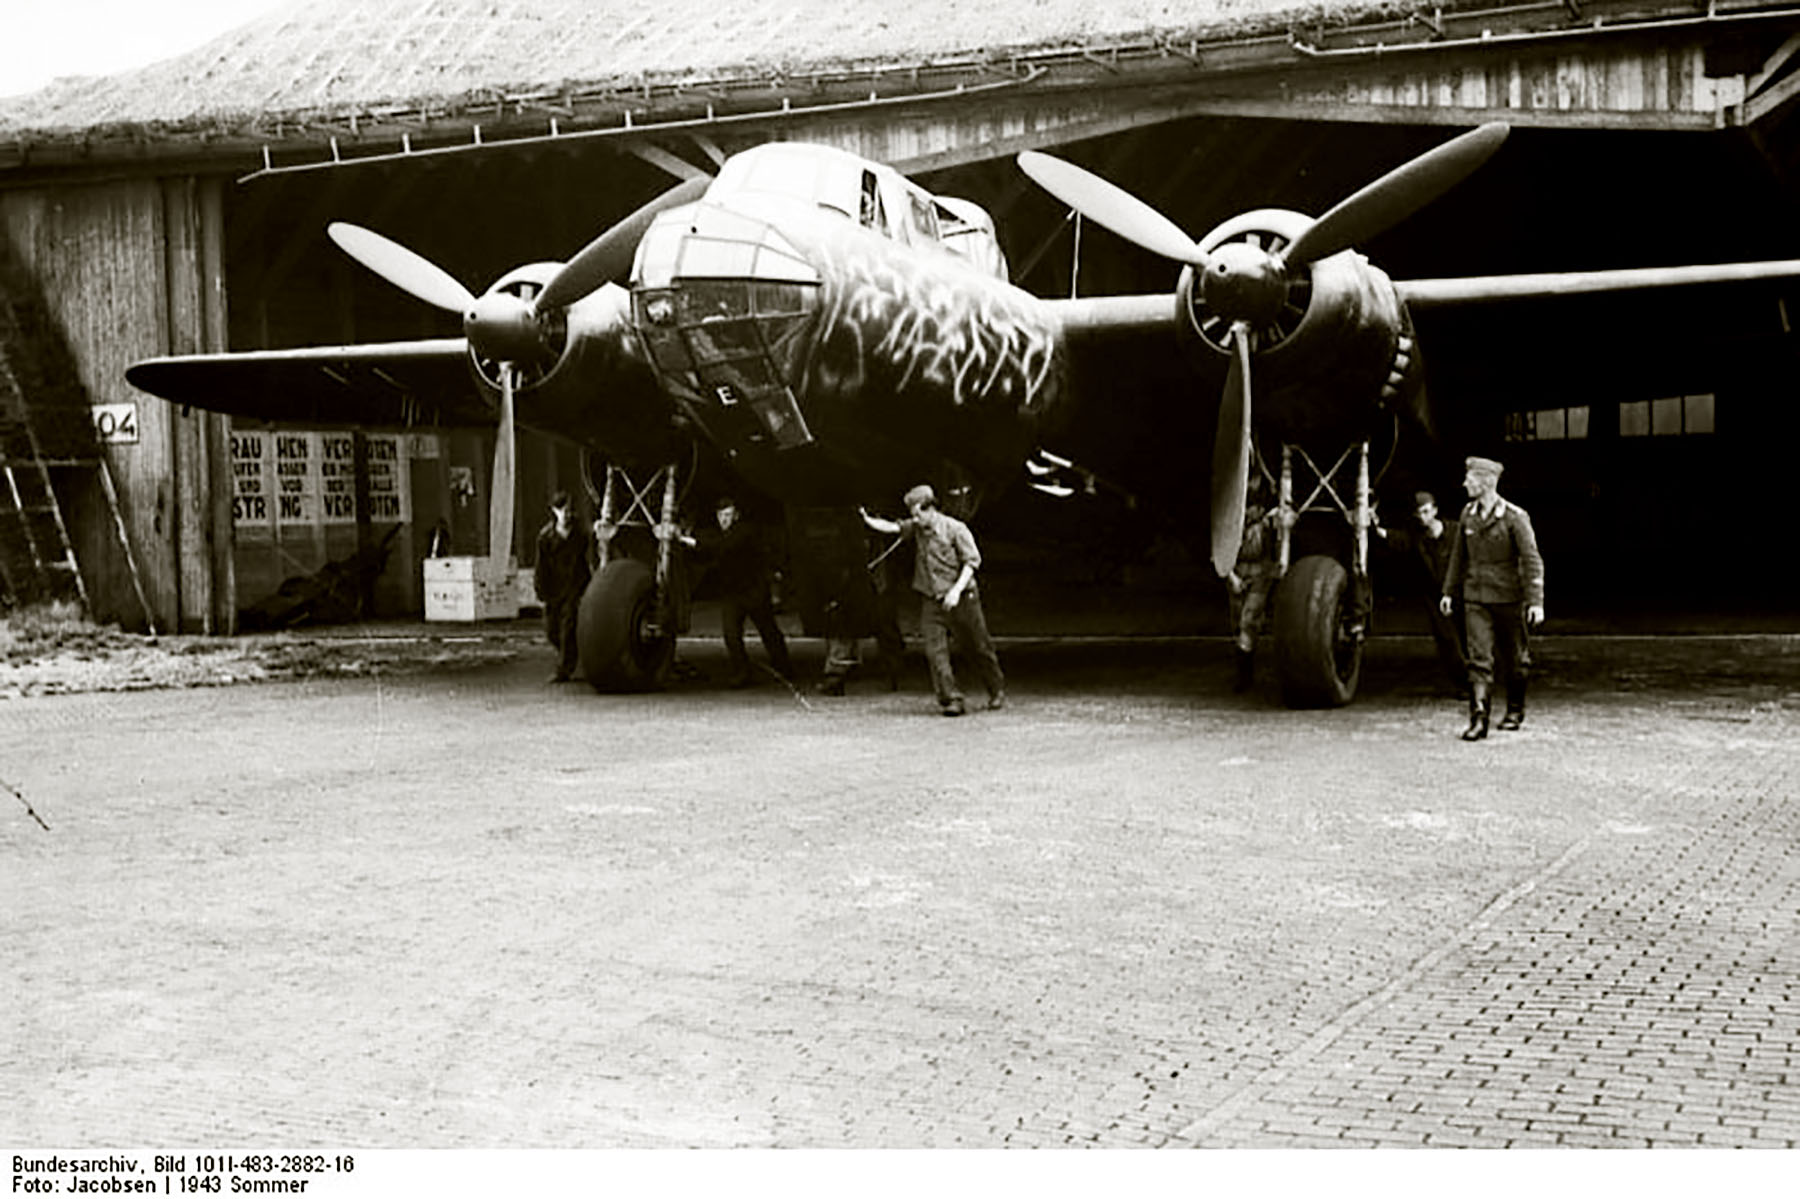 Dornier Do 217E II.KG40 aircraft code E being moved from its hangar for a engine run France 1943 Bild 101I 483 2882 16